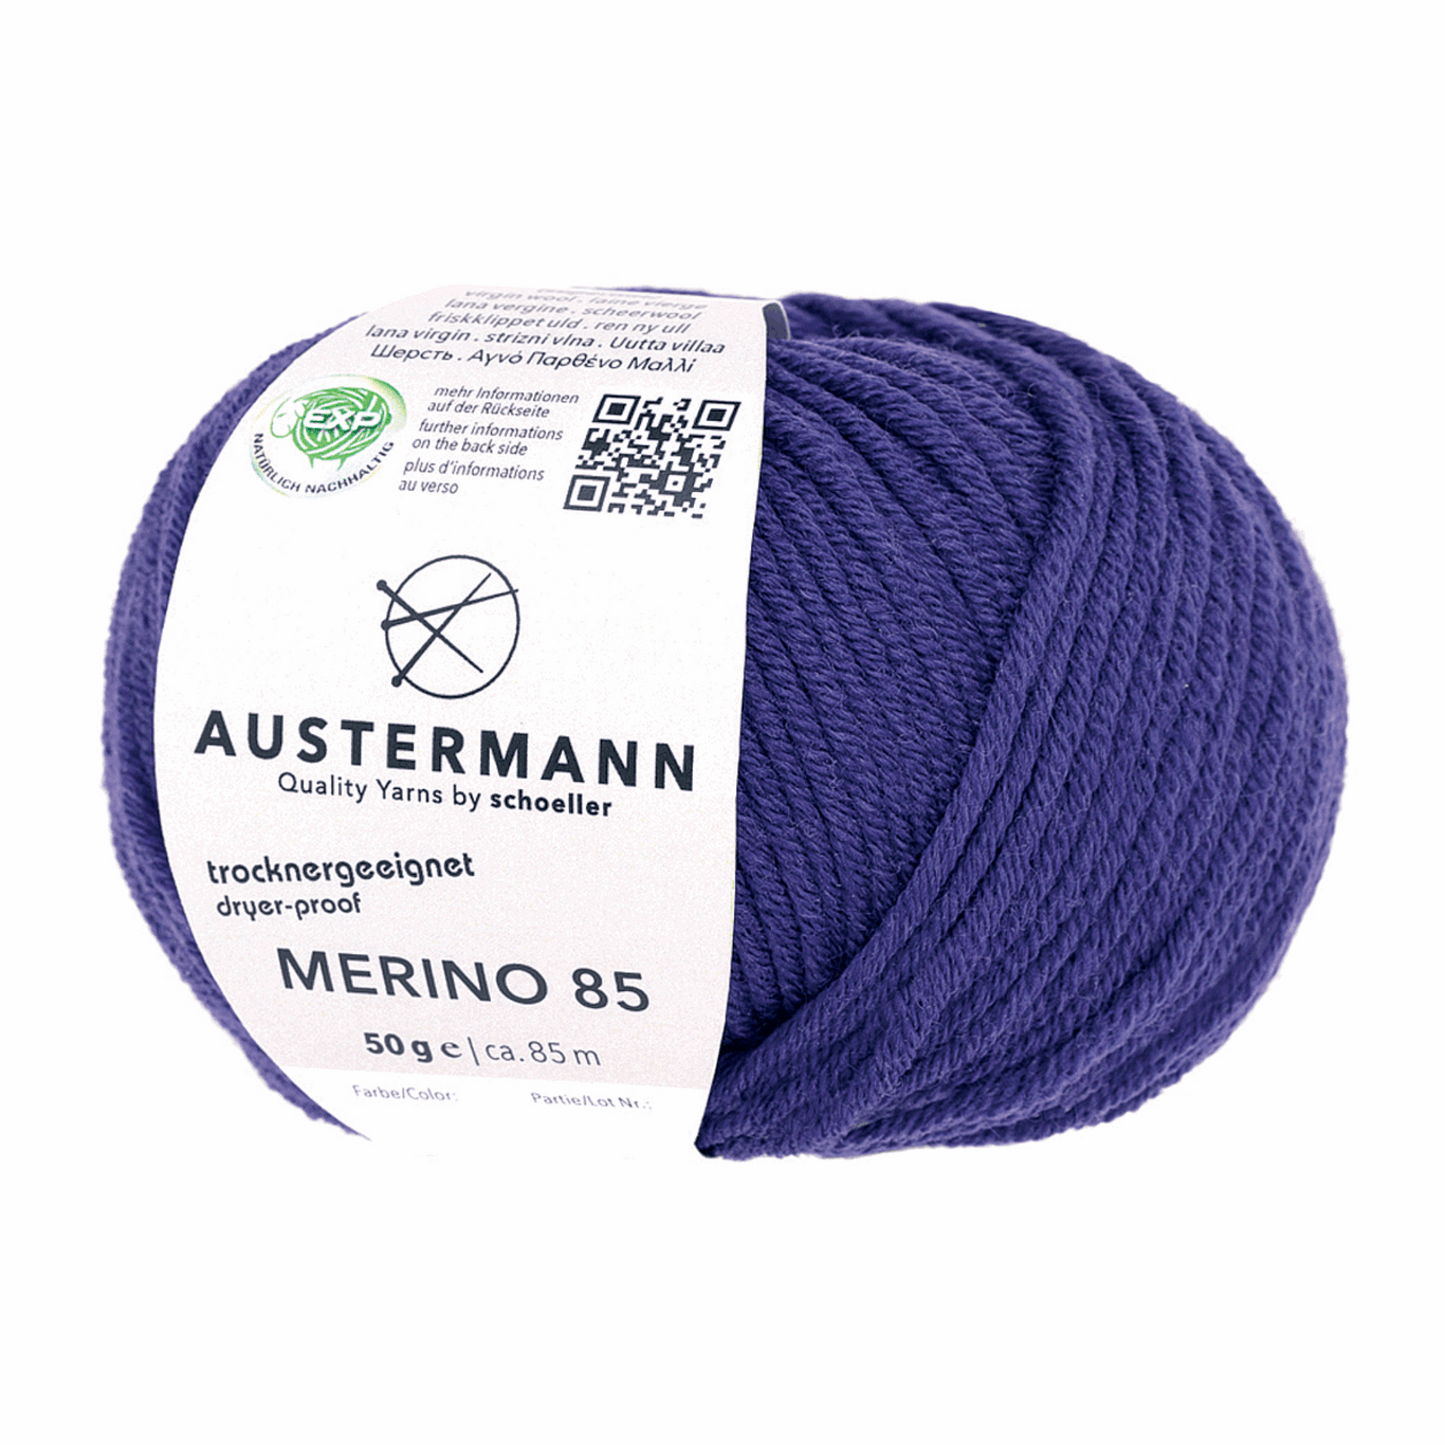 Austermann Merino 85 EXP 50g, 97614, Farbe lila 11